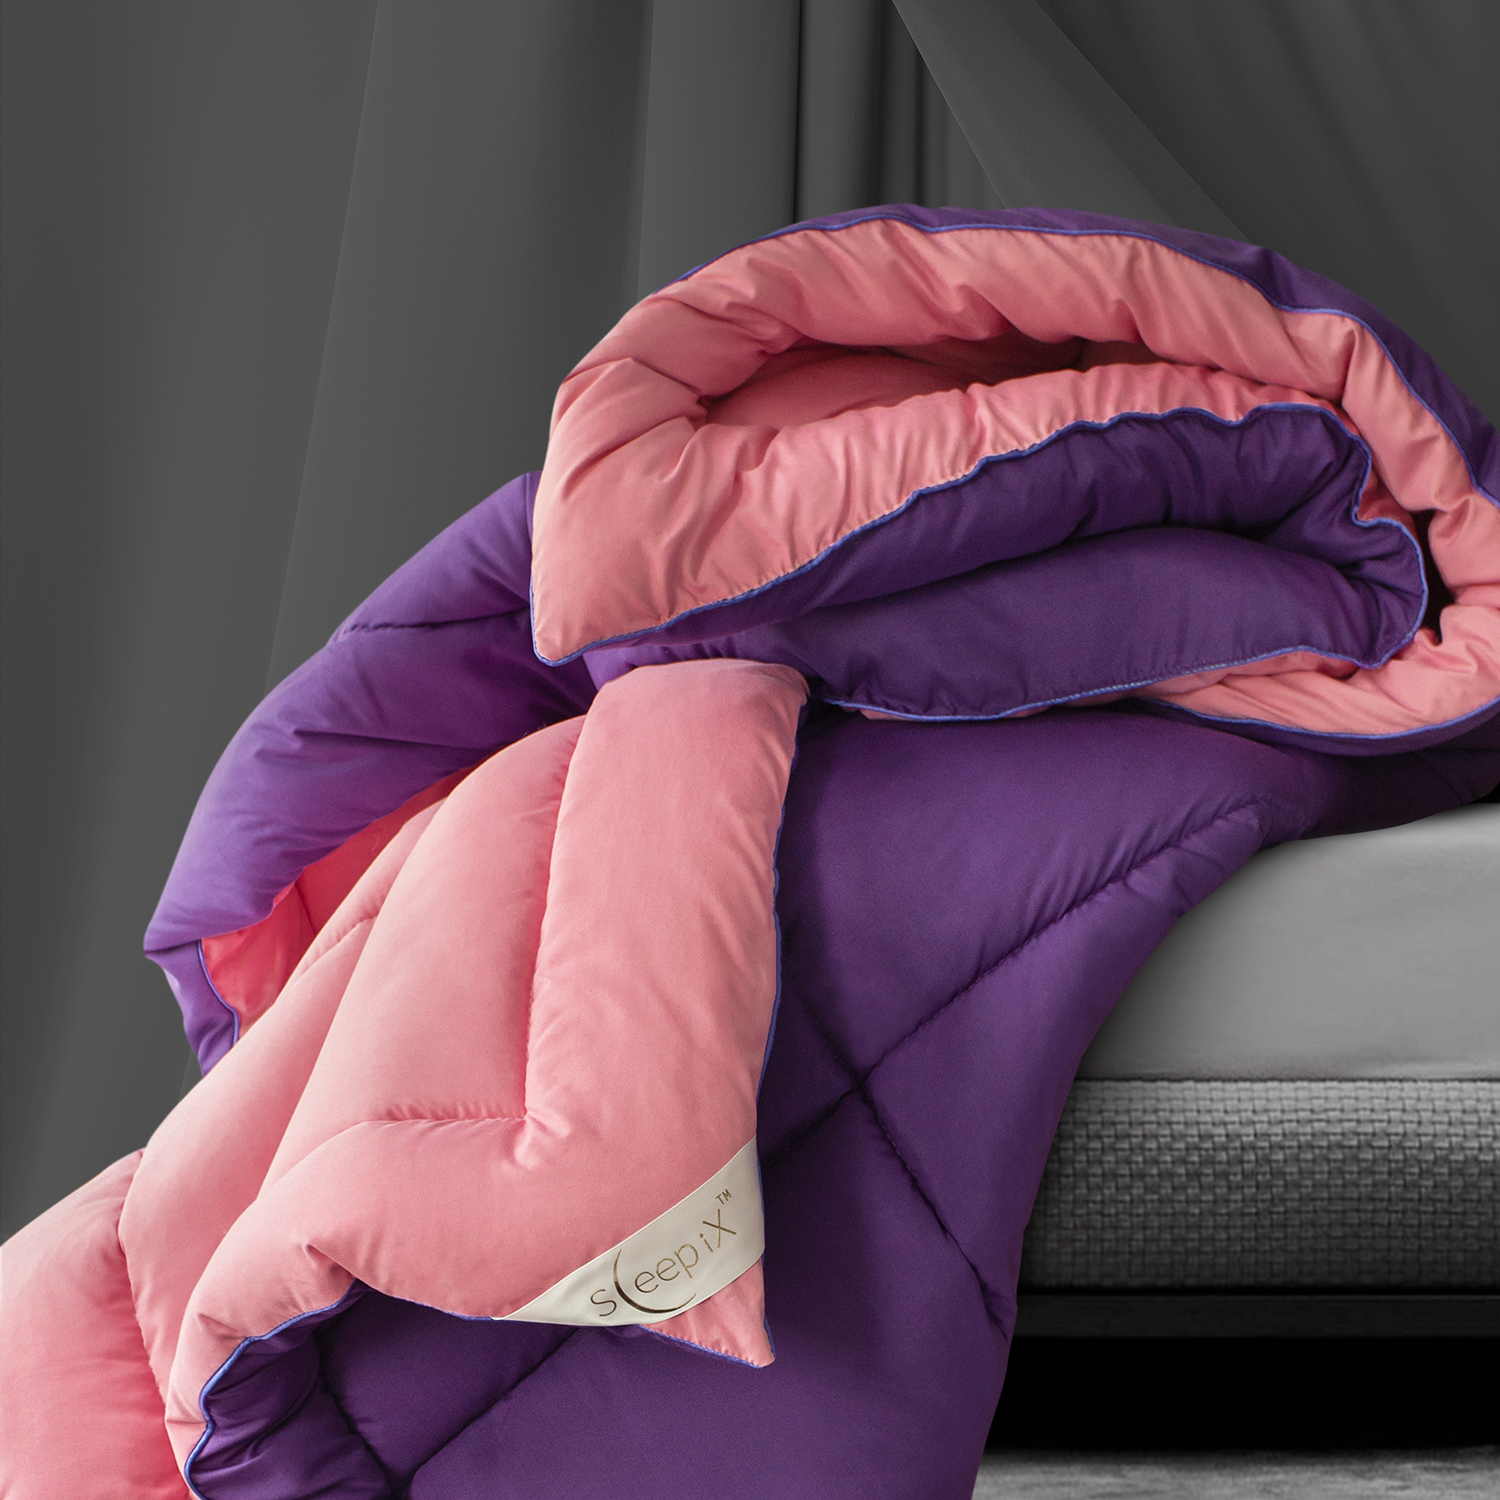 Одеяло MultiColor Цвет: Теплый Розовый/Темно-Фиолетовый (140х205 см), размер 140х205 см pva320030 Одеяло MultiColor Цвет: Теплый Розовый/Темно-Фиолетовый (140х205 см) - фото 1